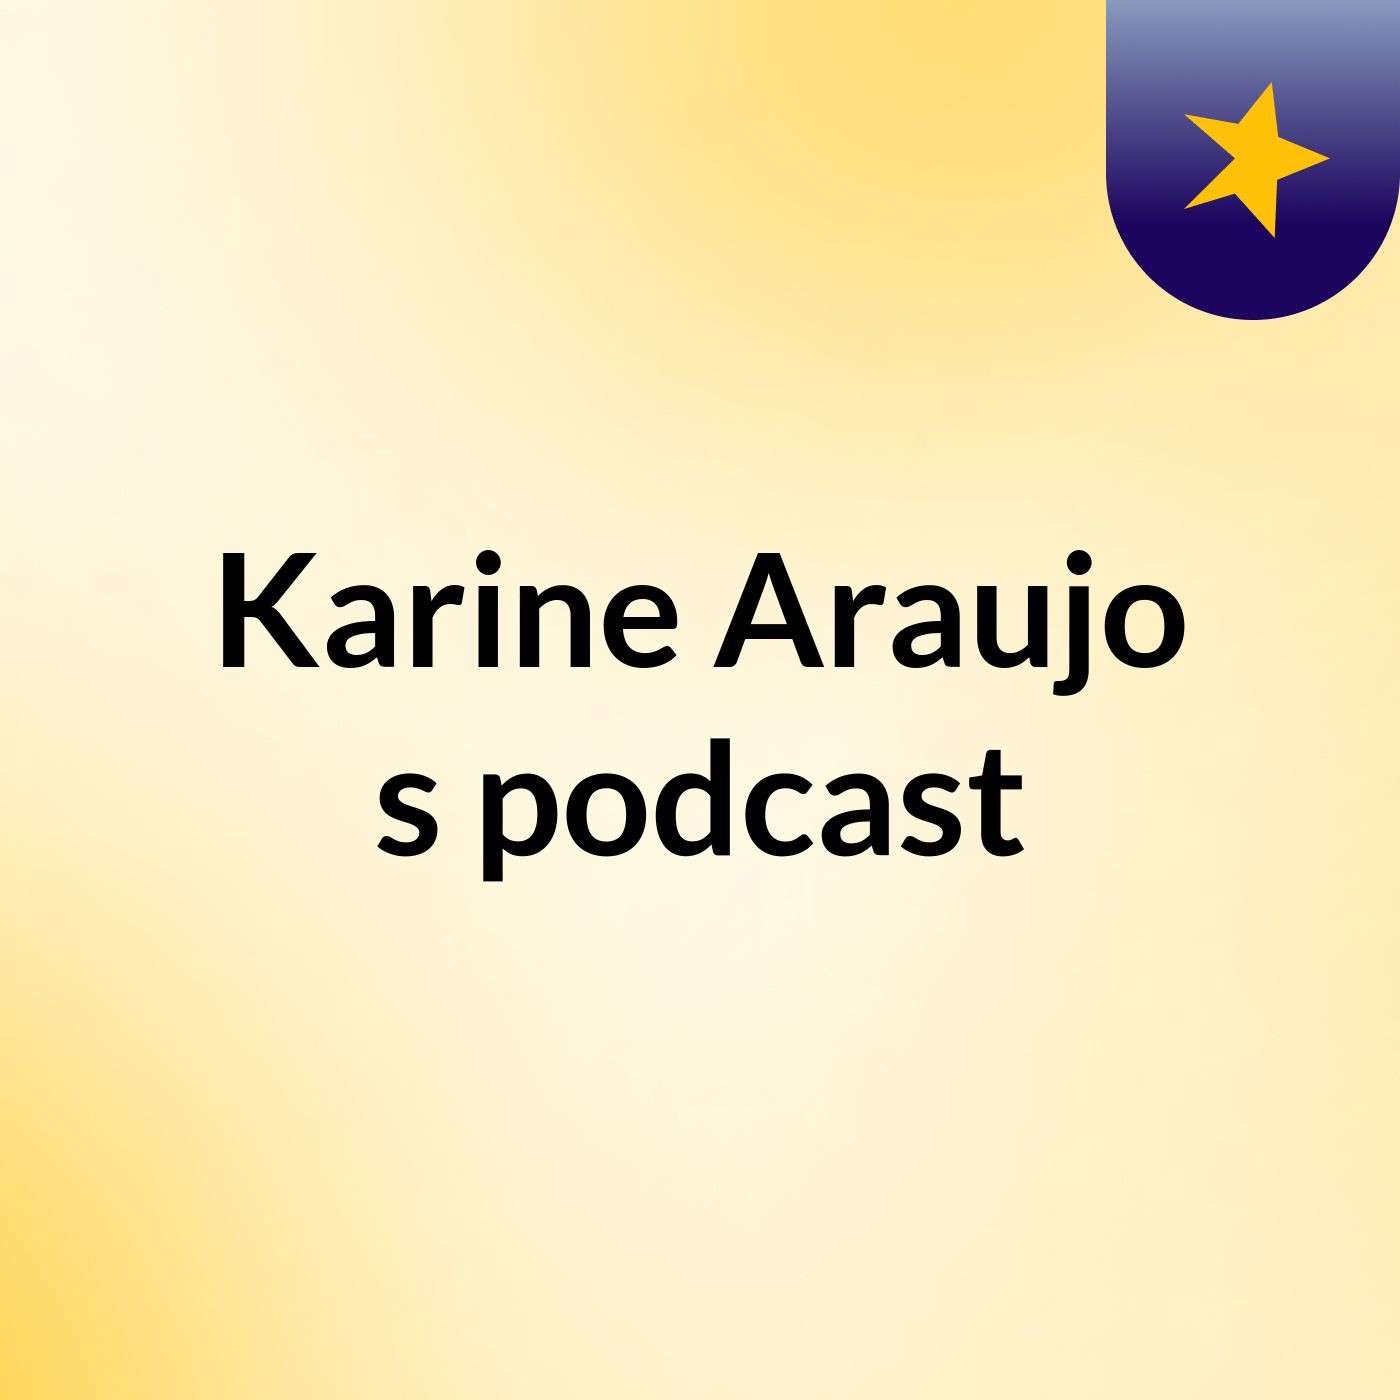 Karine Araujo's podcast